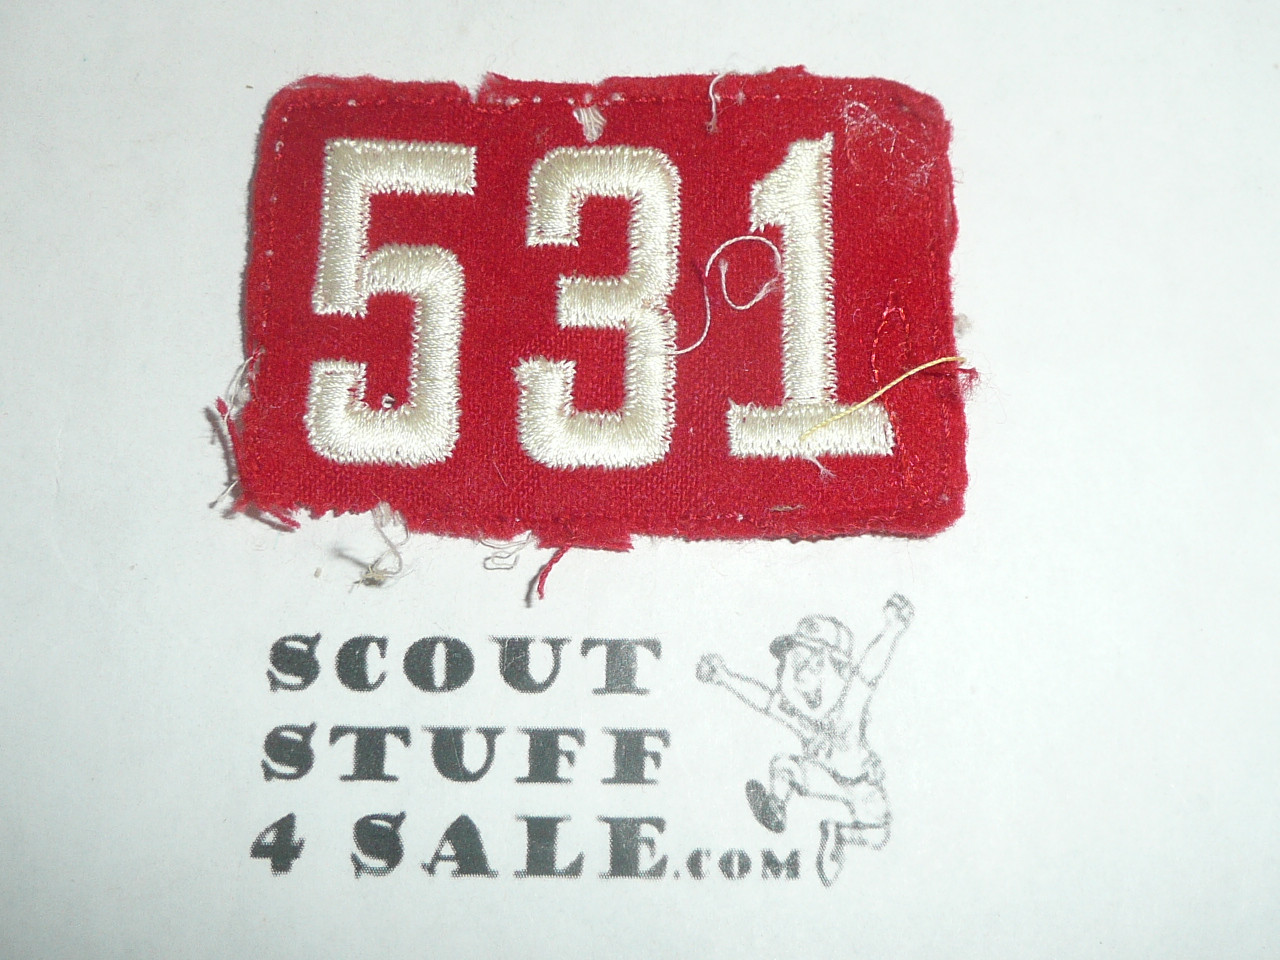 1930's Red Troop Numeral "531", felt, used